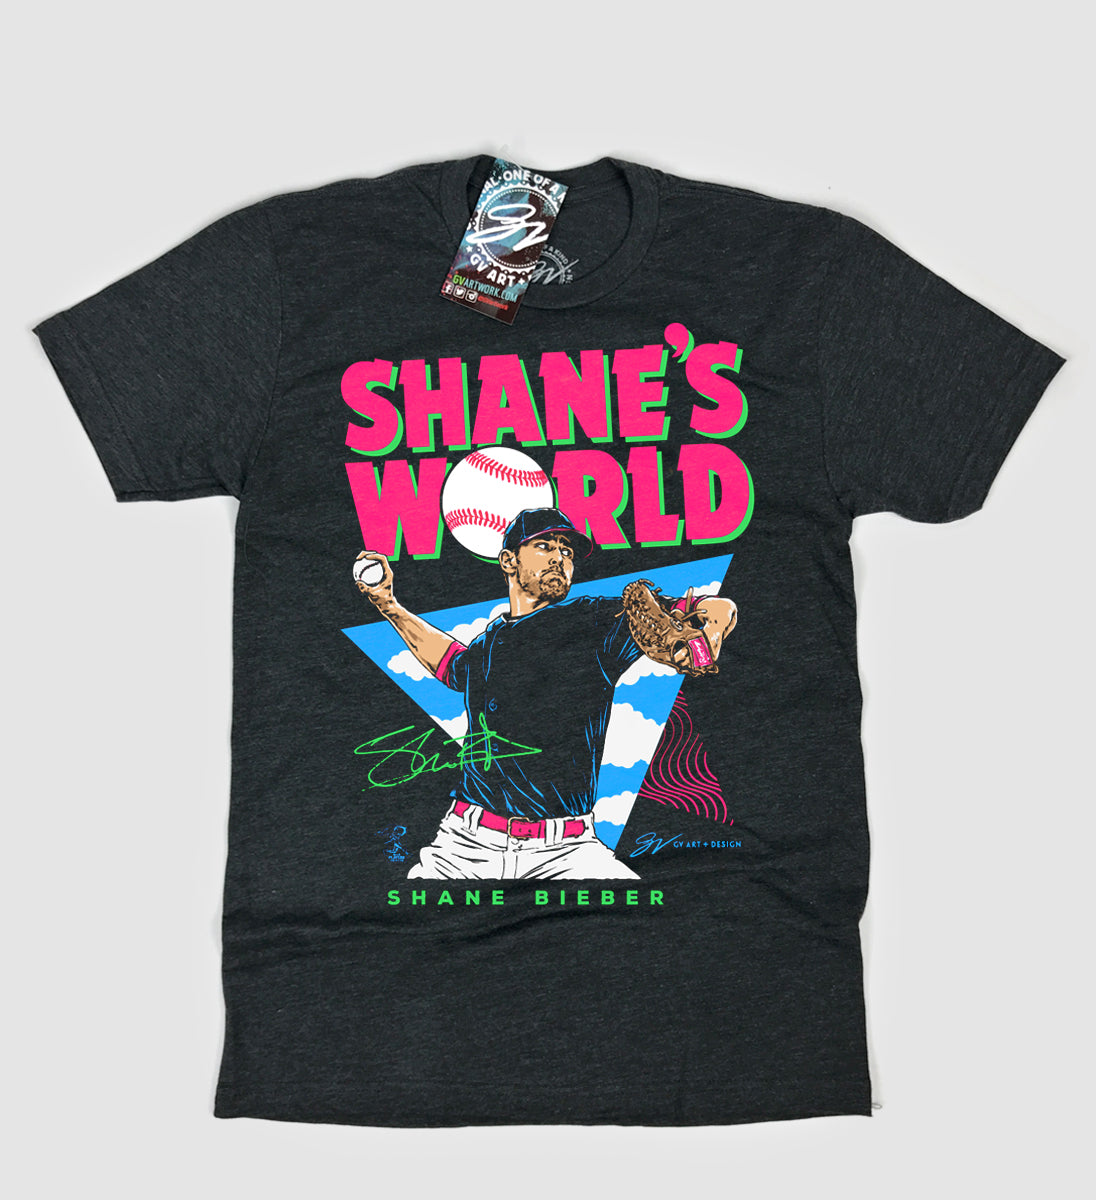 "Shane's World" Shane Bieber T shirt